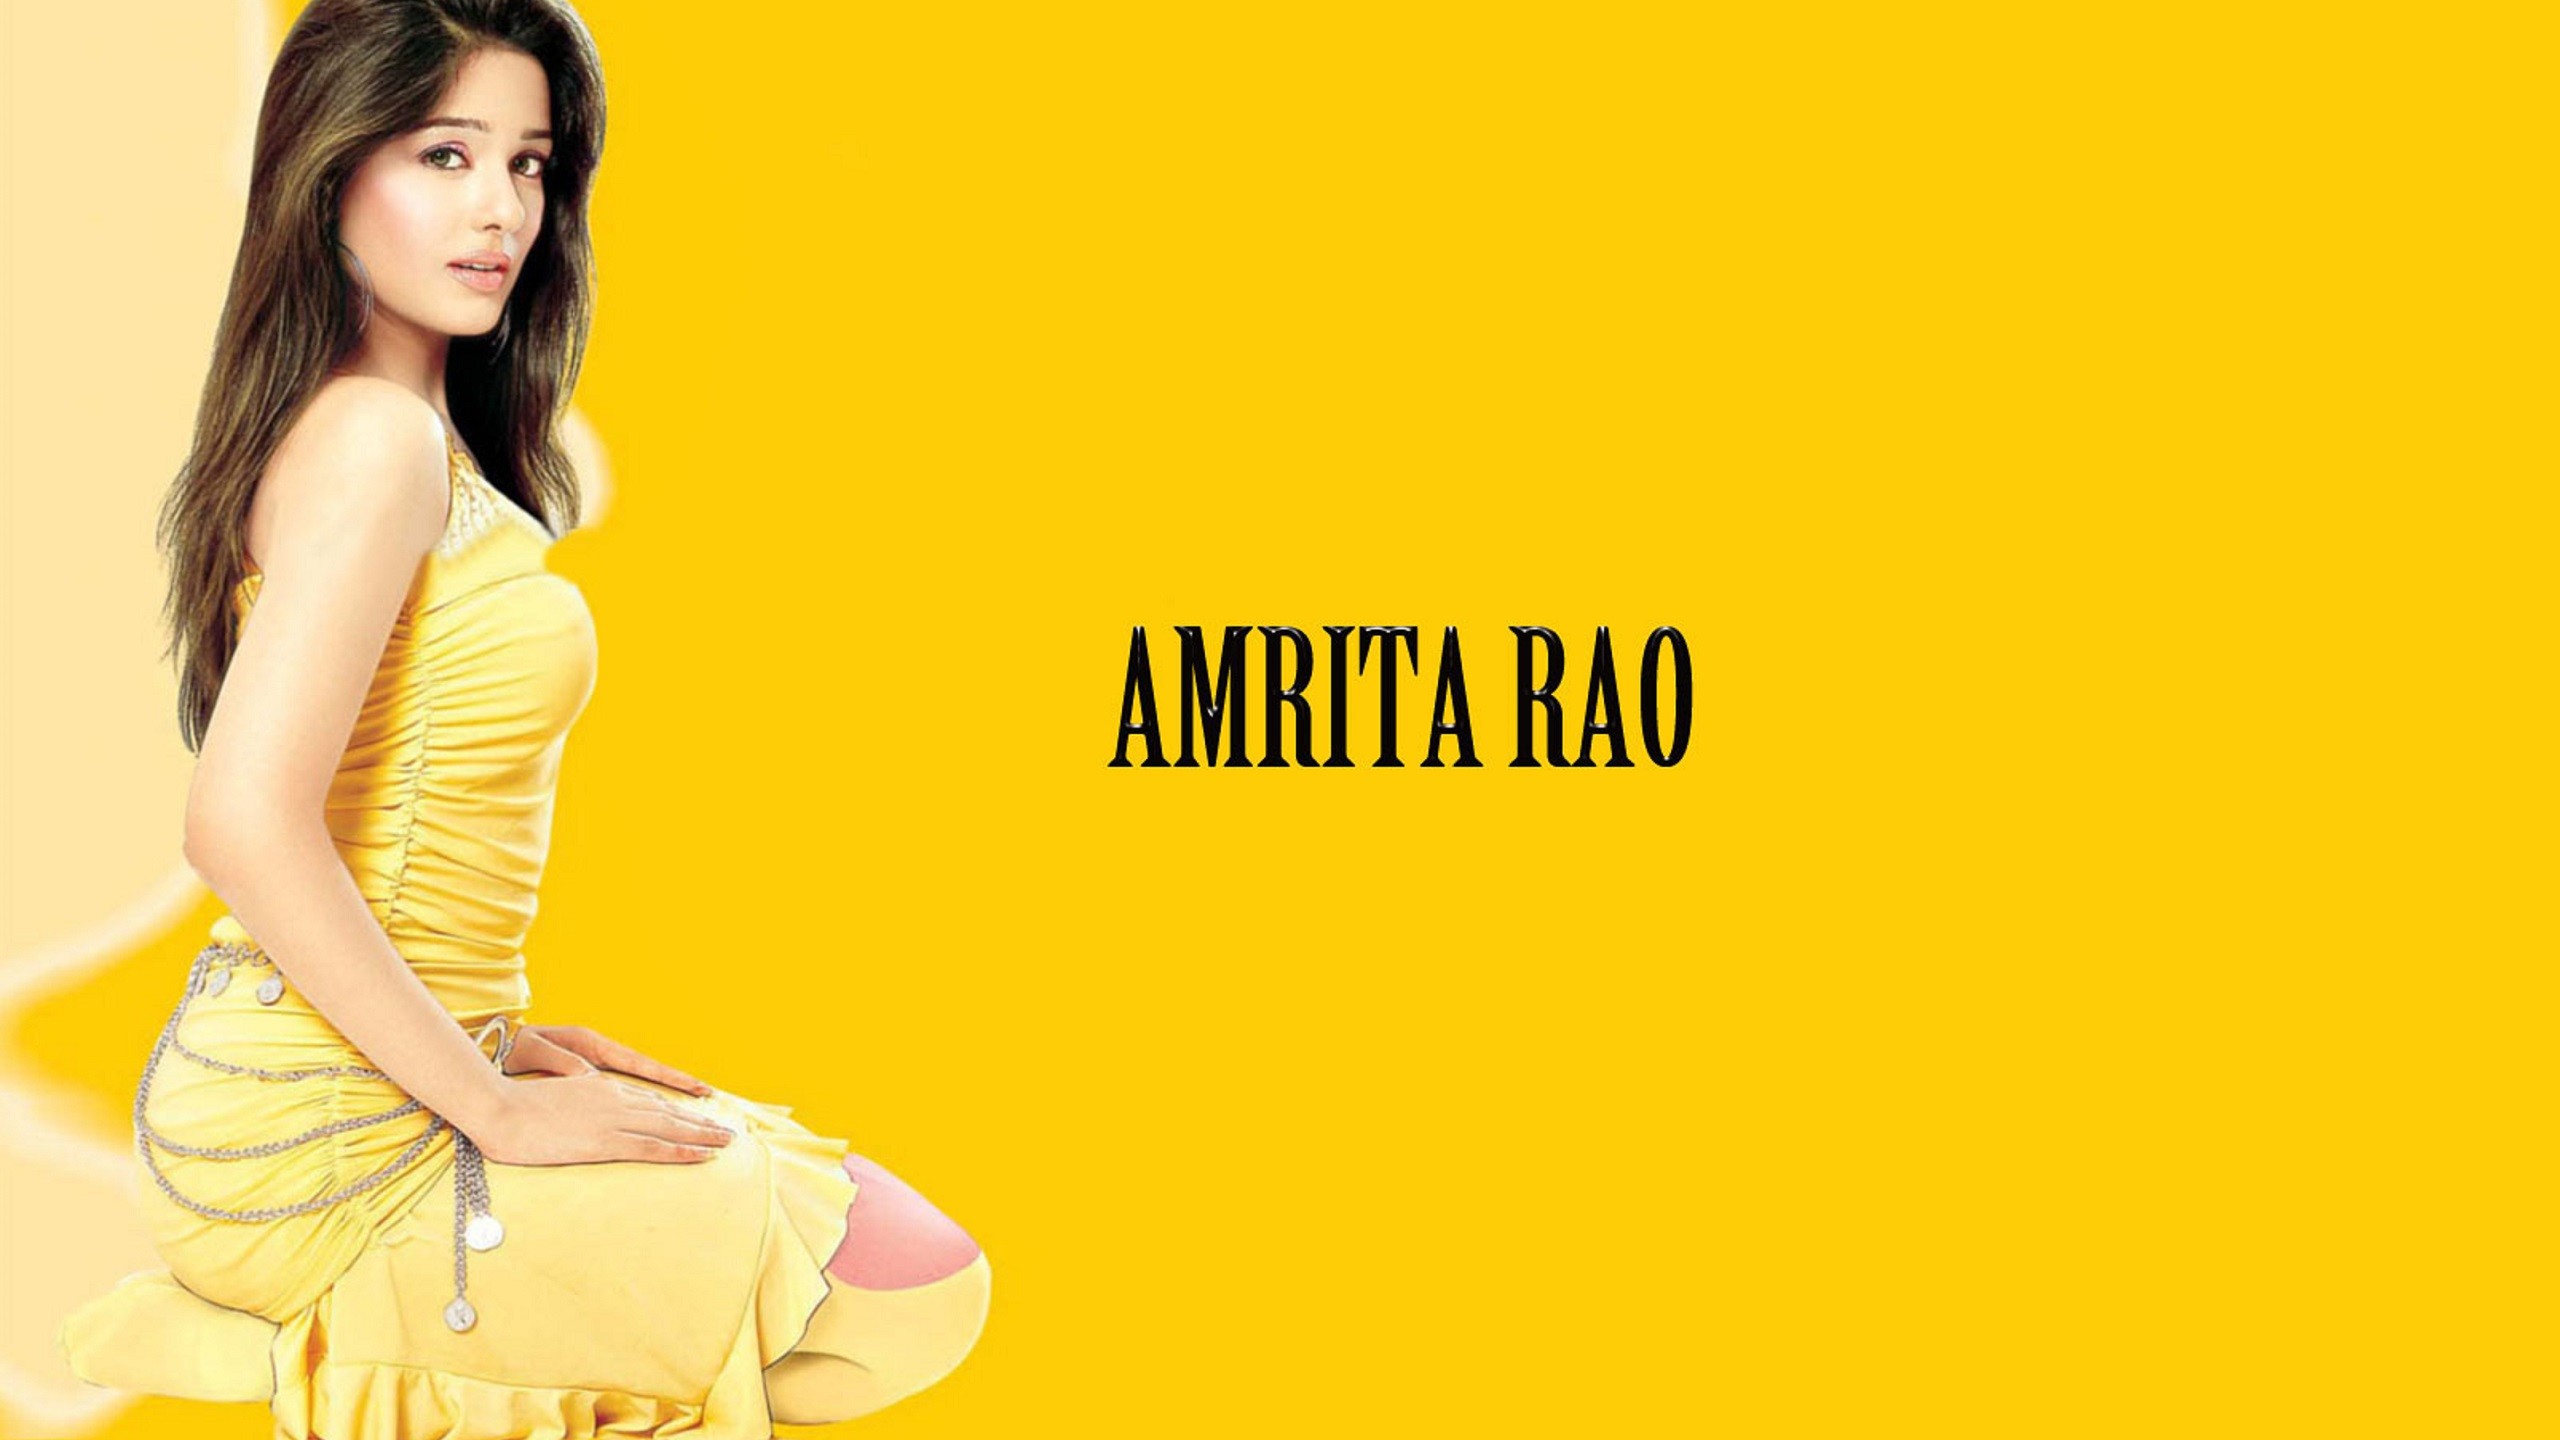 Amrita-Rao-Yellow-Wallpaper-2560x1440